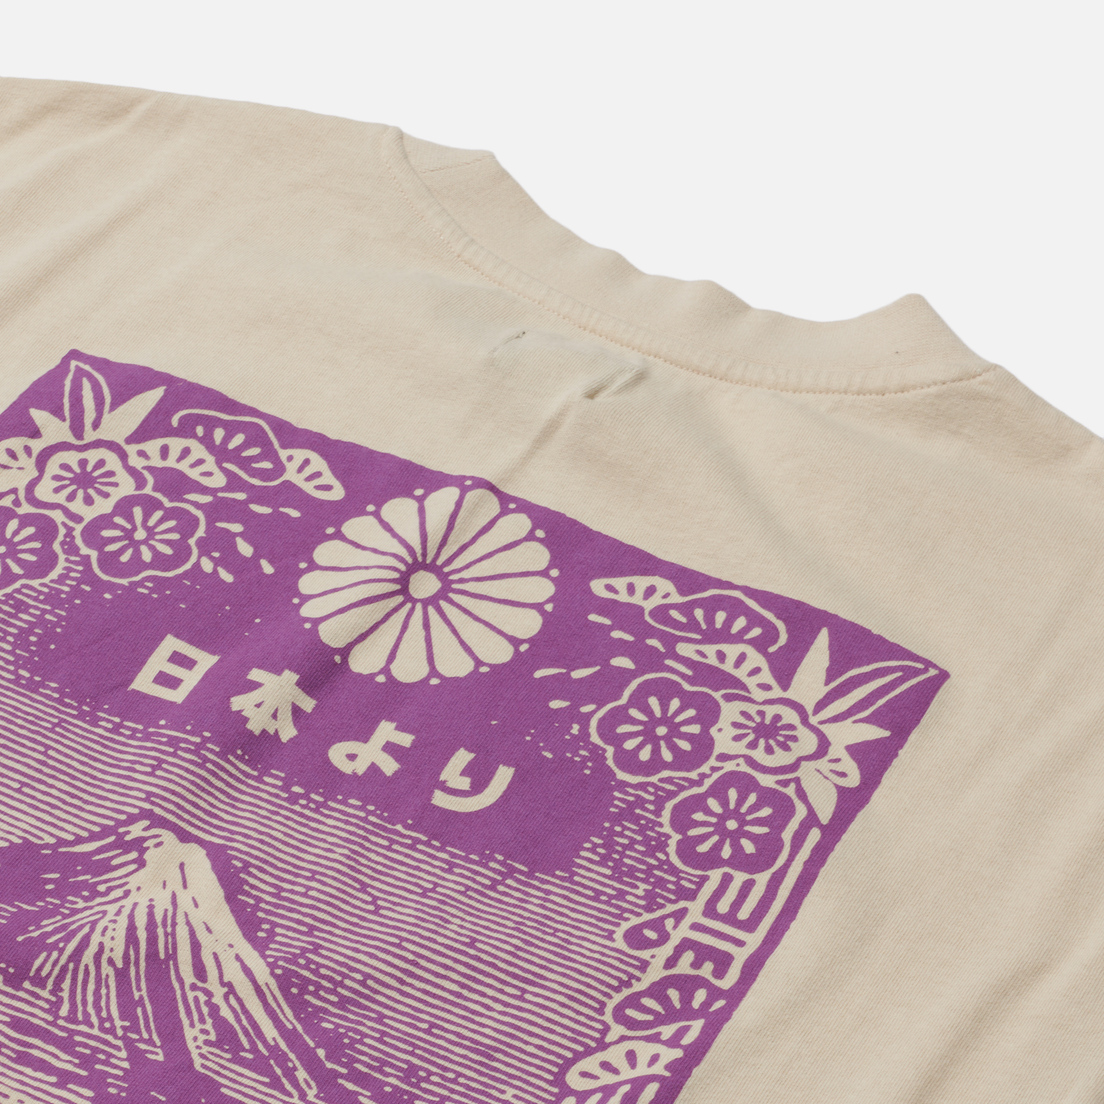 Edwin Мужская футболка From Mount Fuji